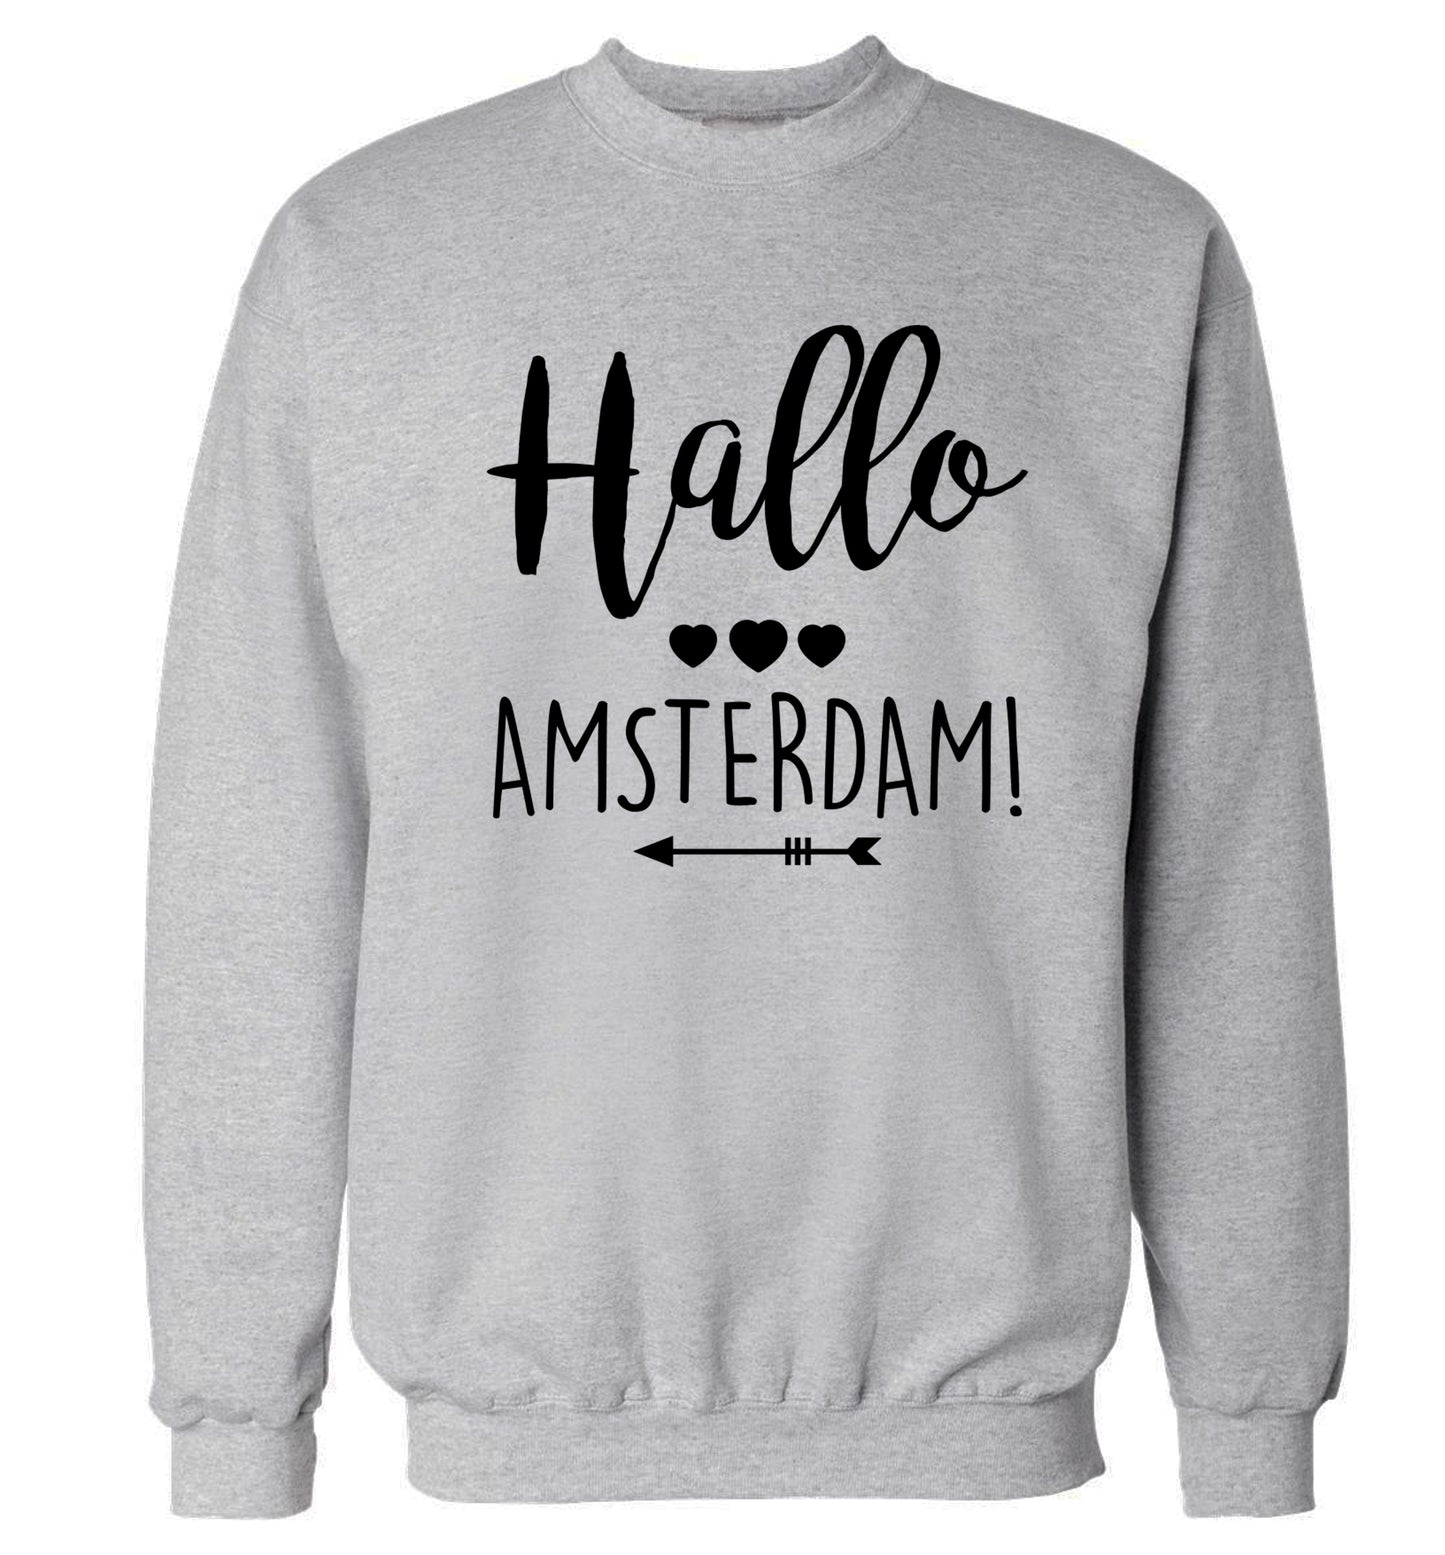 Hallo Amsterdam Adult's unisex grey Sweater 2XL